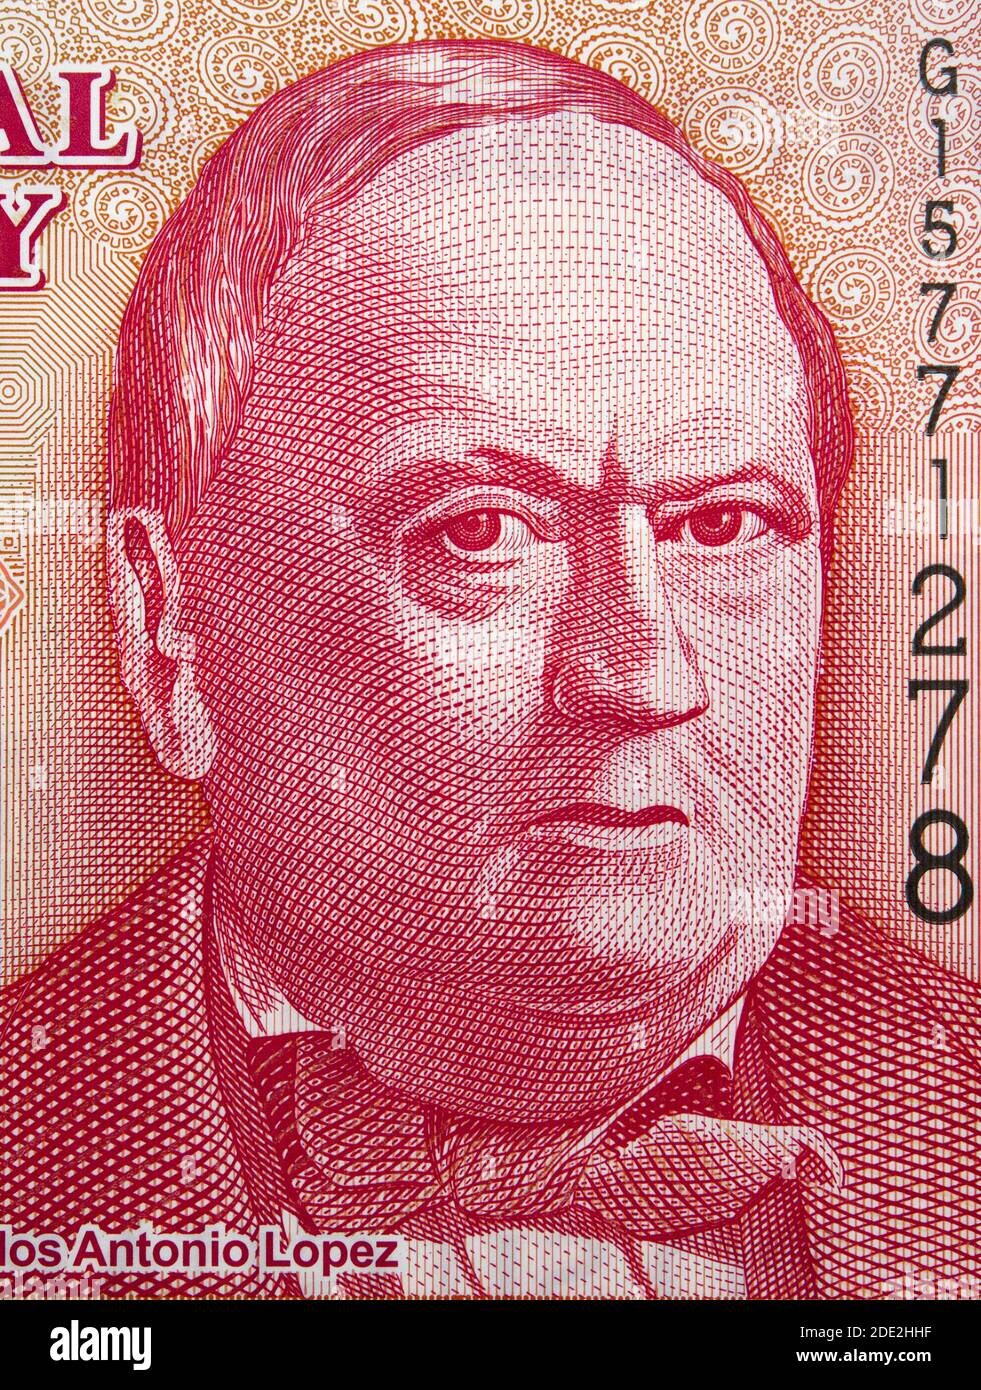 Carlos Antonio Lopez (1792 - 1862) portrait on Paraguay 5000 Guarani (2011) banknote closeup.  First President of Paraguay. Stock Photo